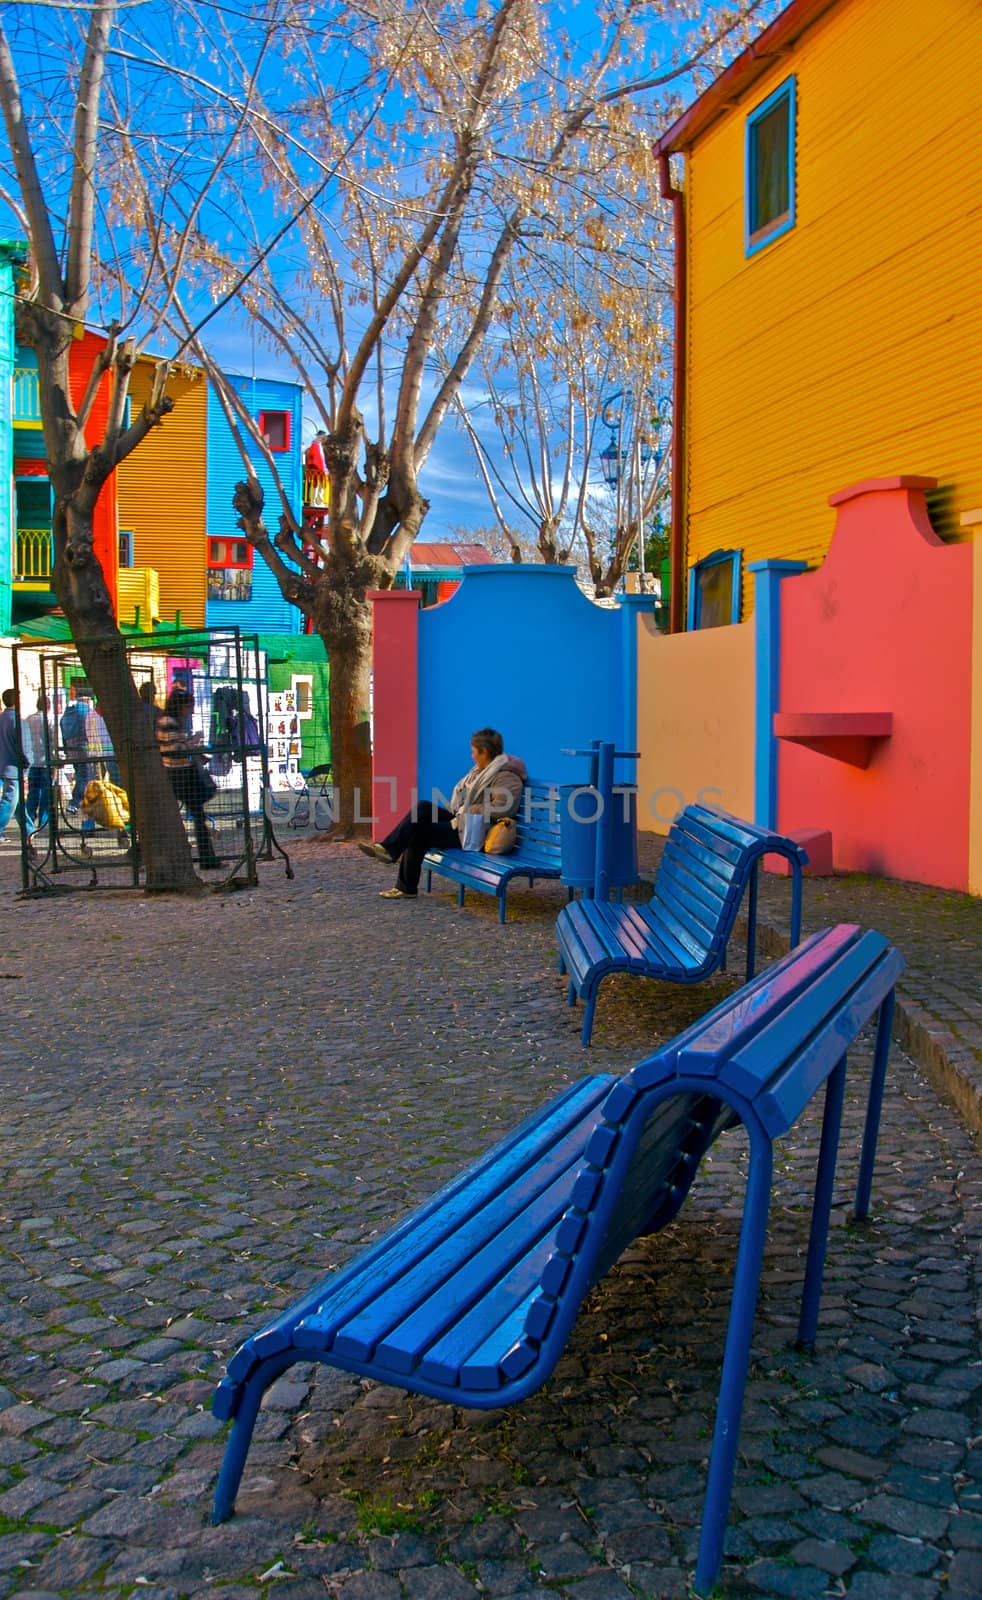 View of Caminito Street in Barrio de La Boca in Buenos Aires, Argentina. This is a popular tourist destination.